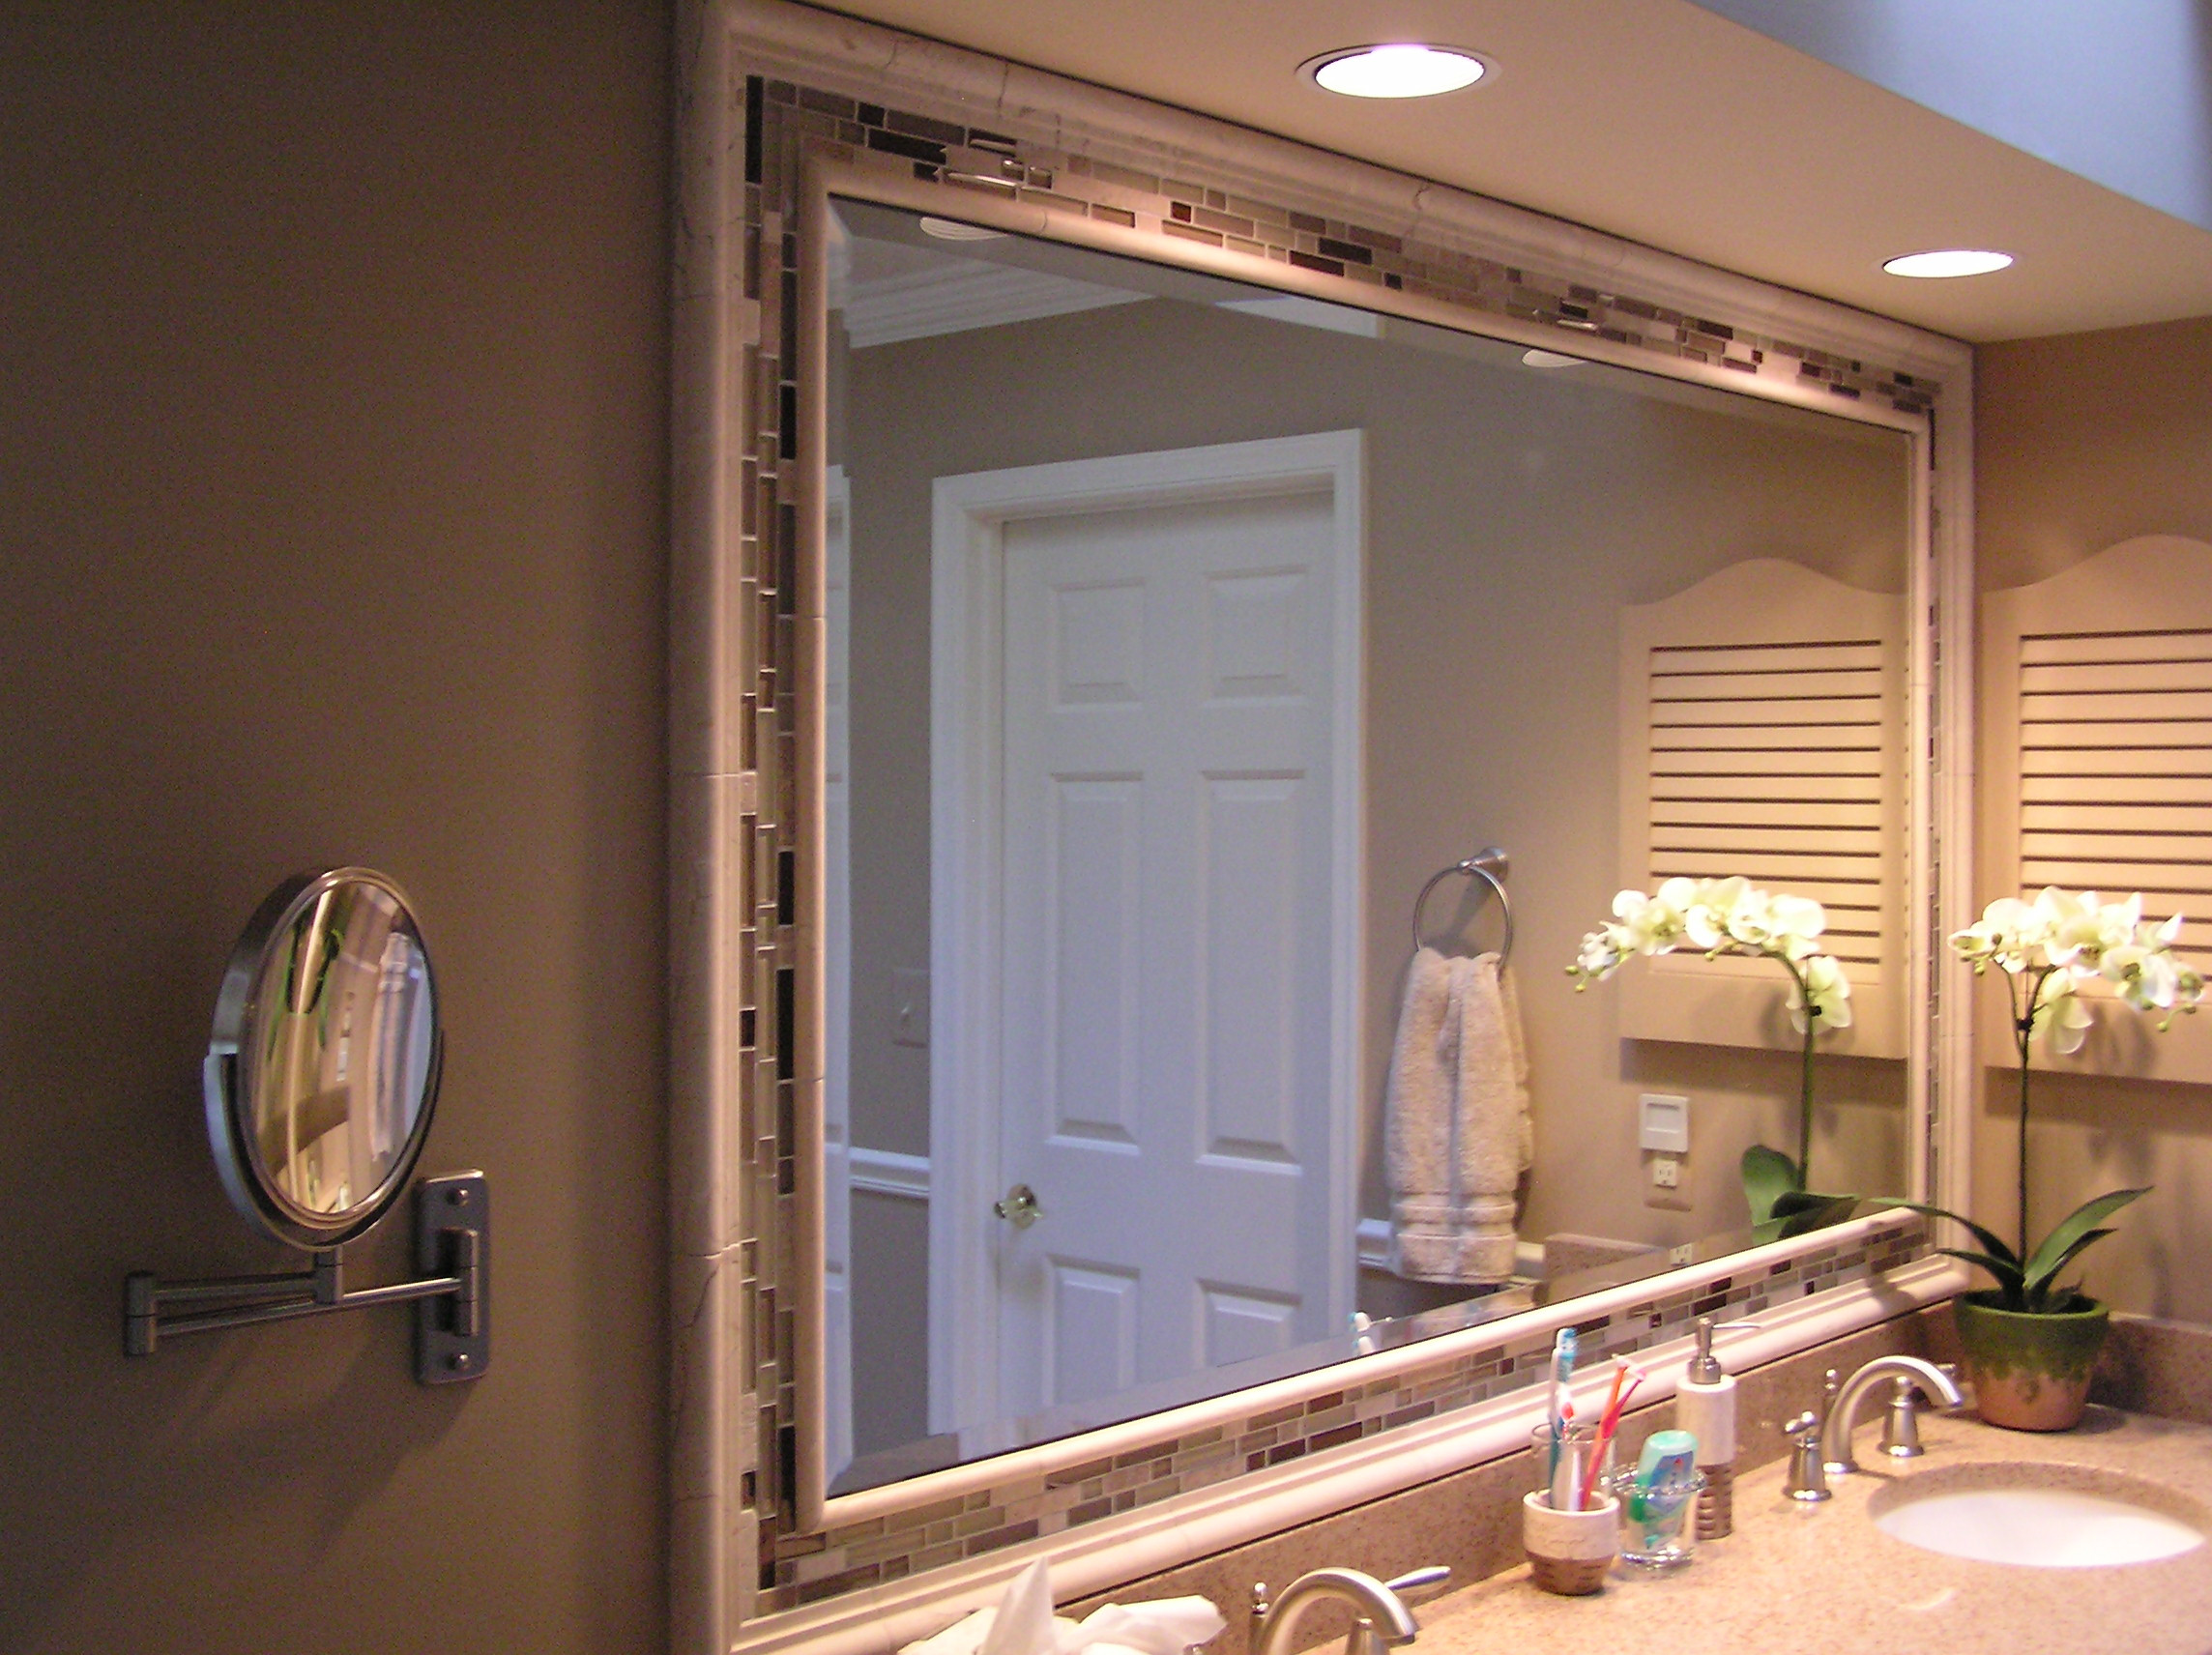 Bathroom Vanity Mirror Ideas
 Bathroom vanity mirror ideas large and beautiful photos